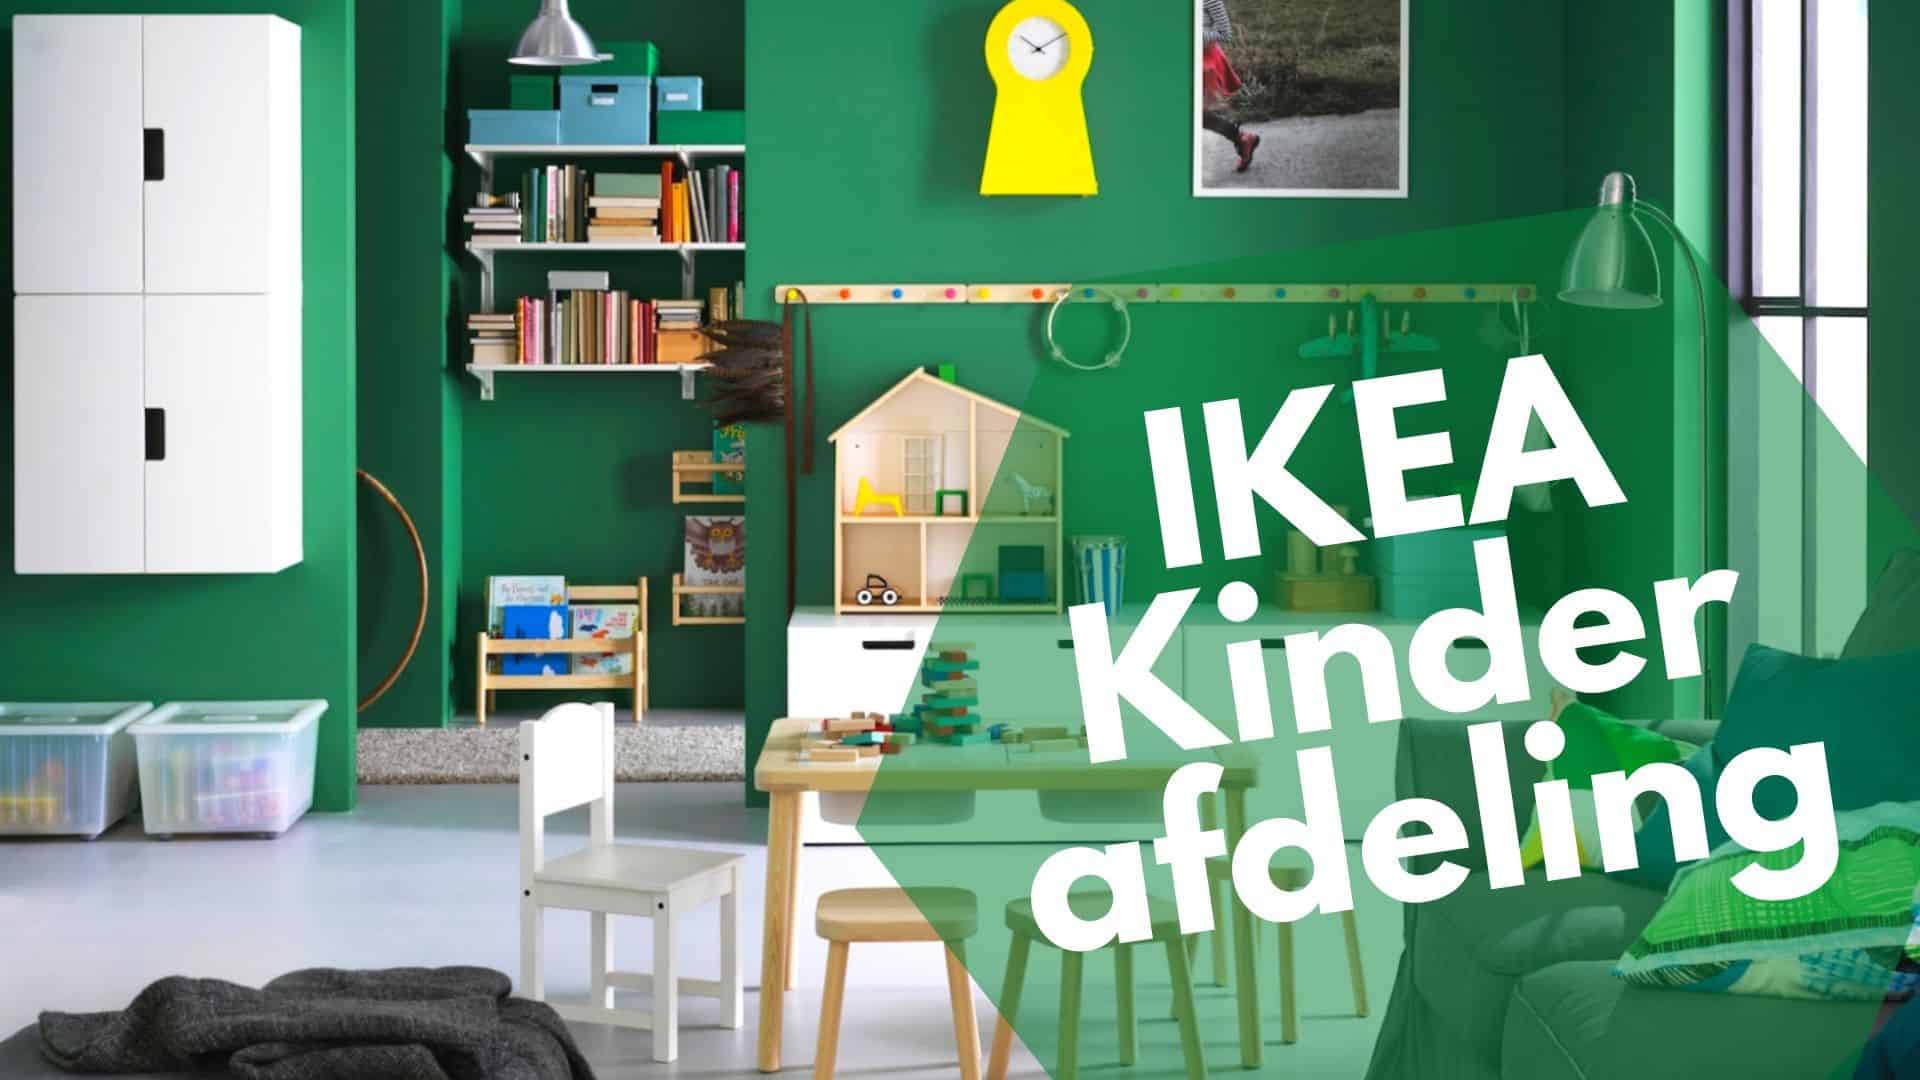 IKEA children's section